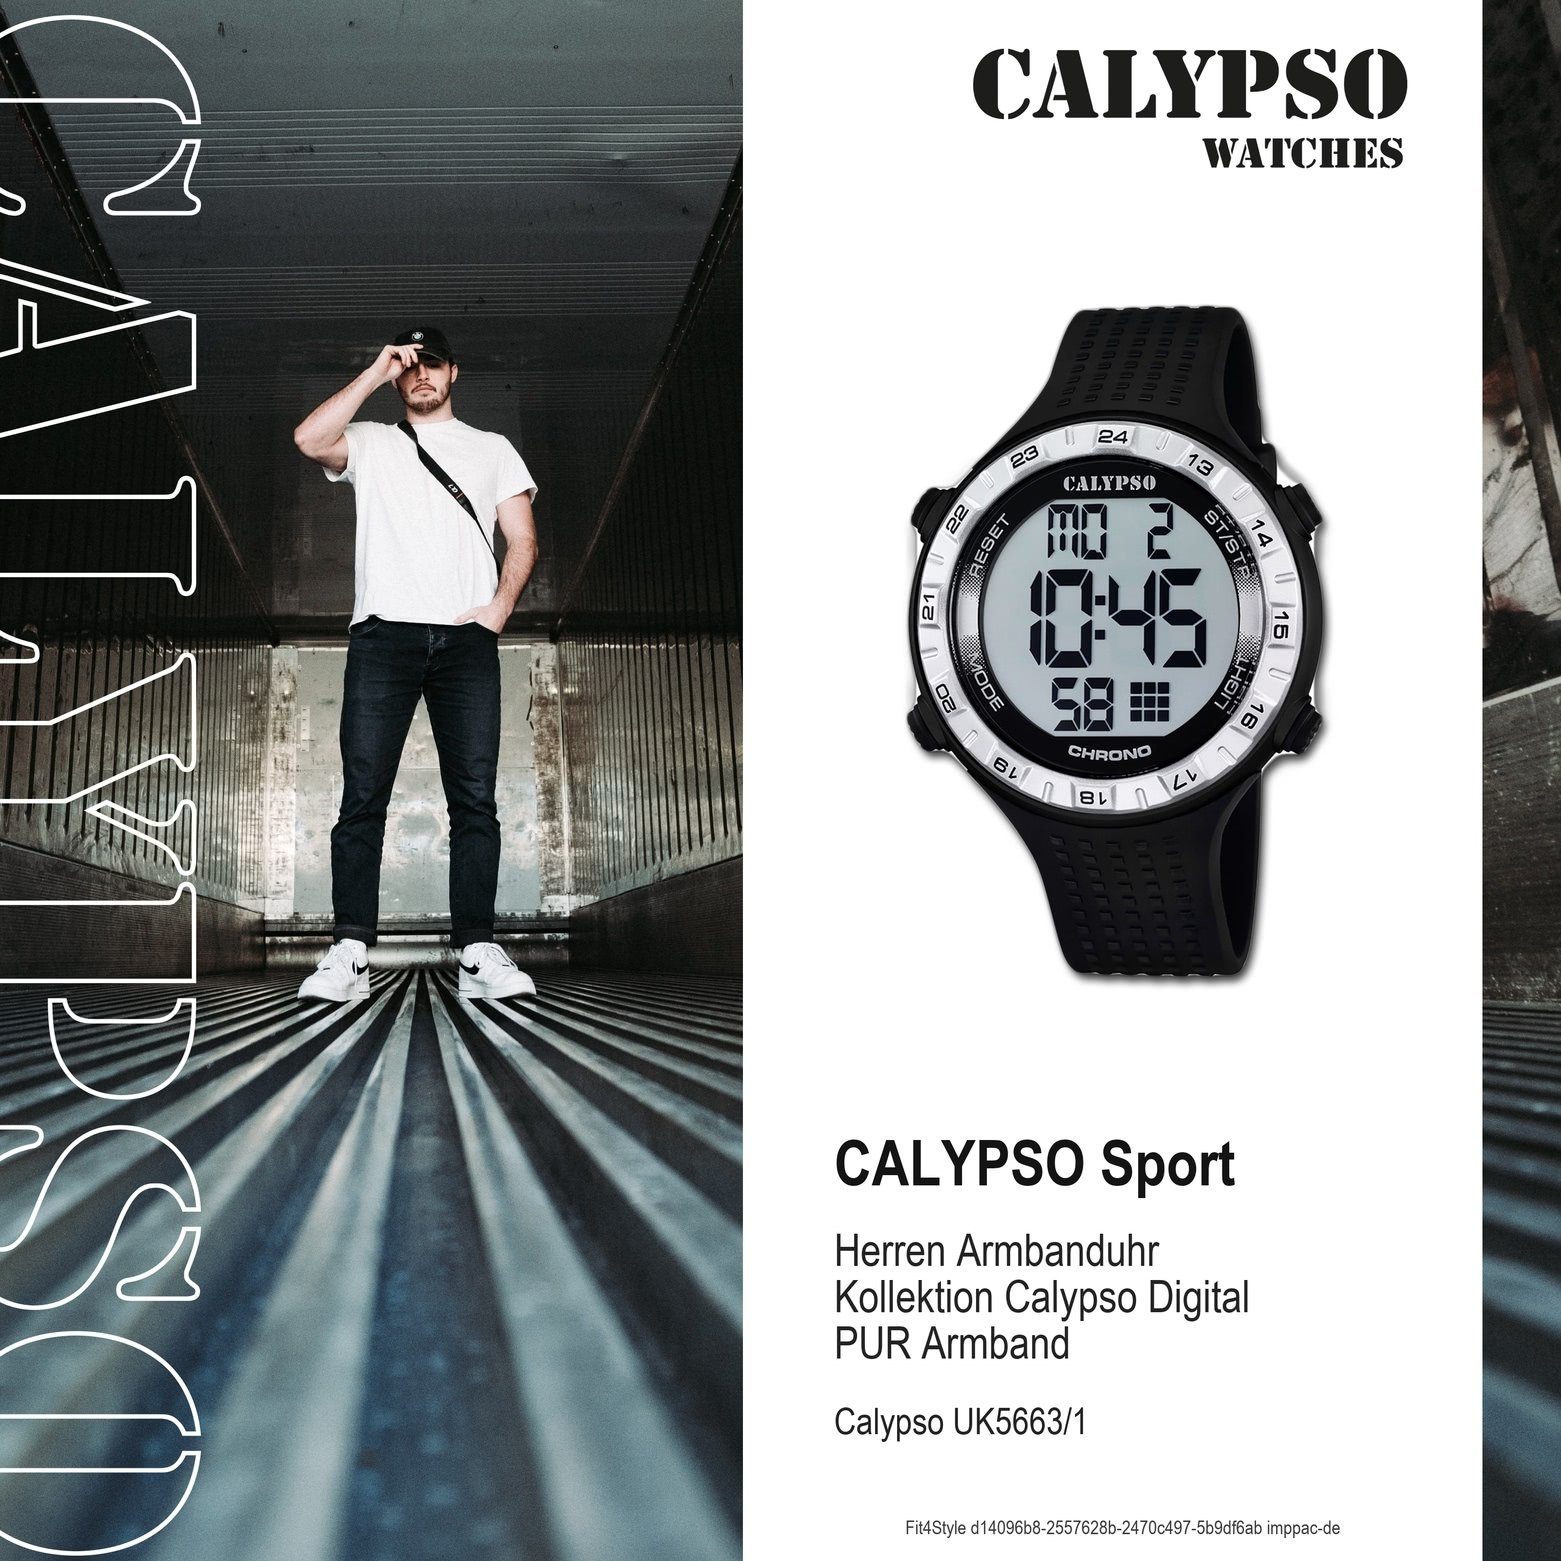 K5663/1 Sport Uhr Herren Calypso WATCHES CALYPSO Herren PURarmband Kunststoffband, Armbanduhr schwarz, rund, Digitaluhr